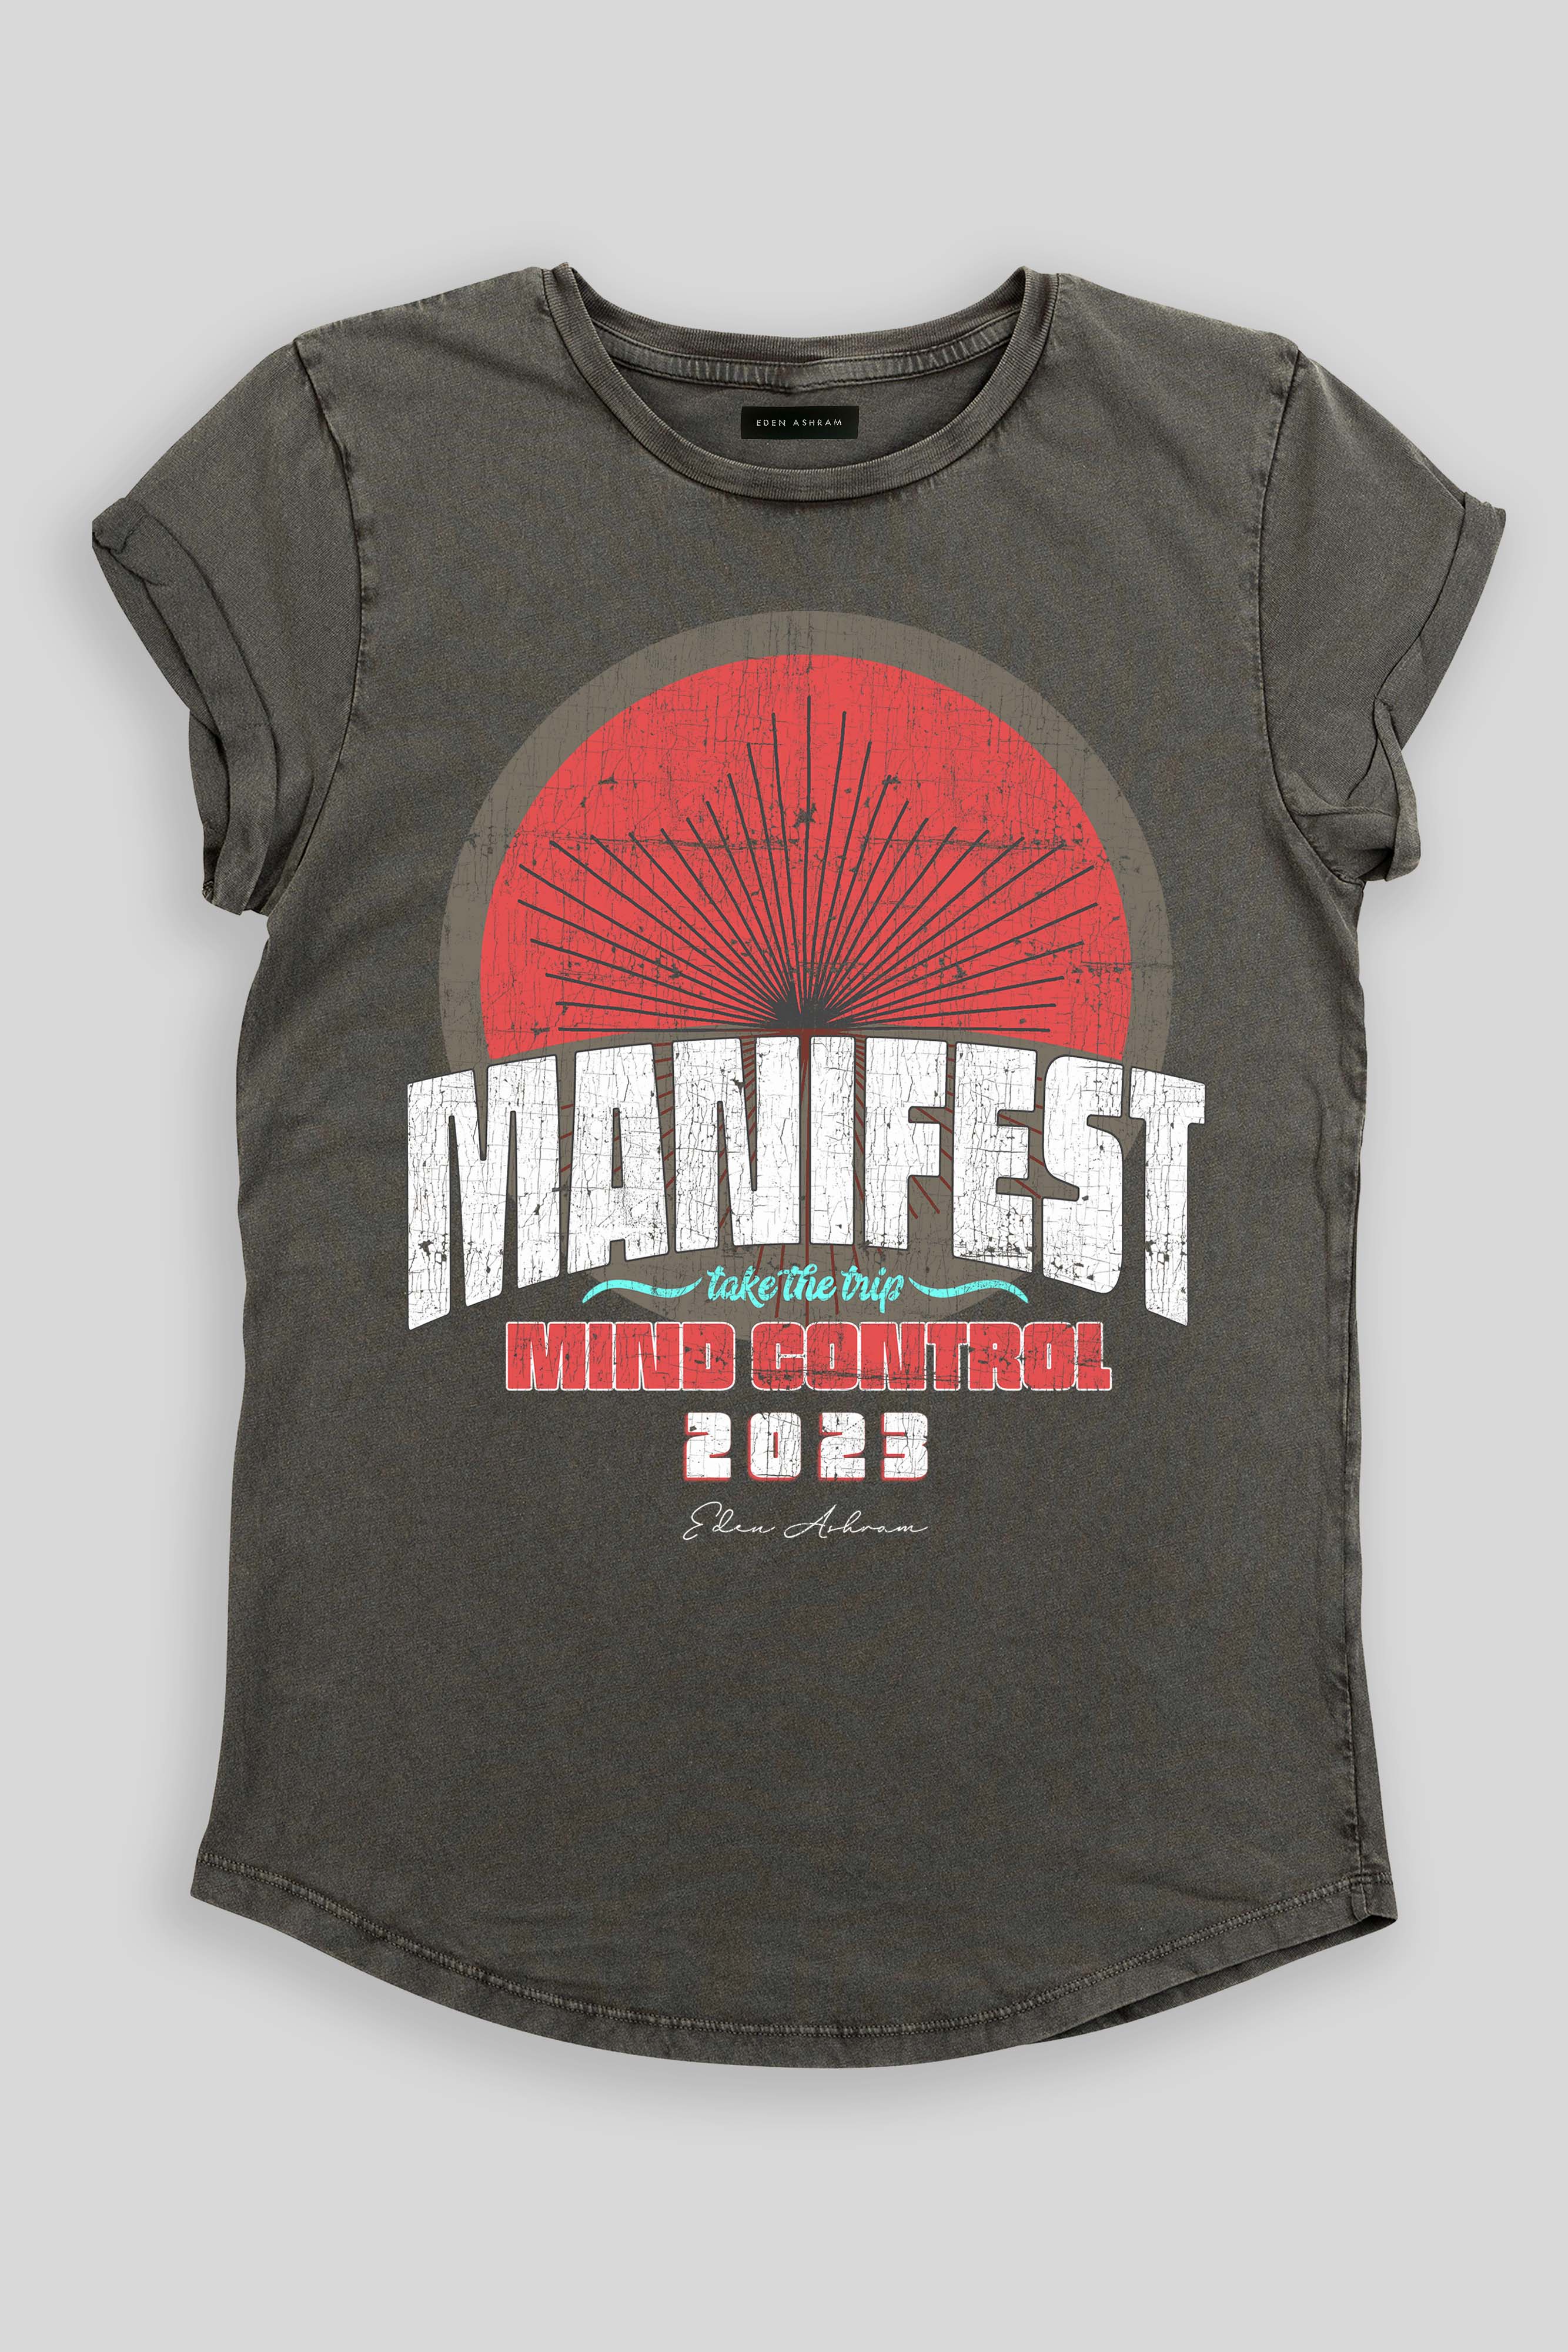 EDEN ASHRAM Manifest Rolled Sleeve Tour T-Shirt Stonewash Grey | 2023 Manifest